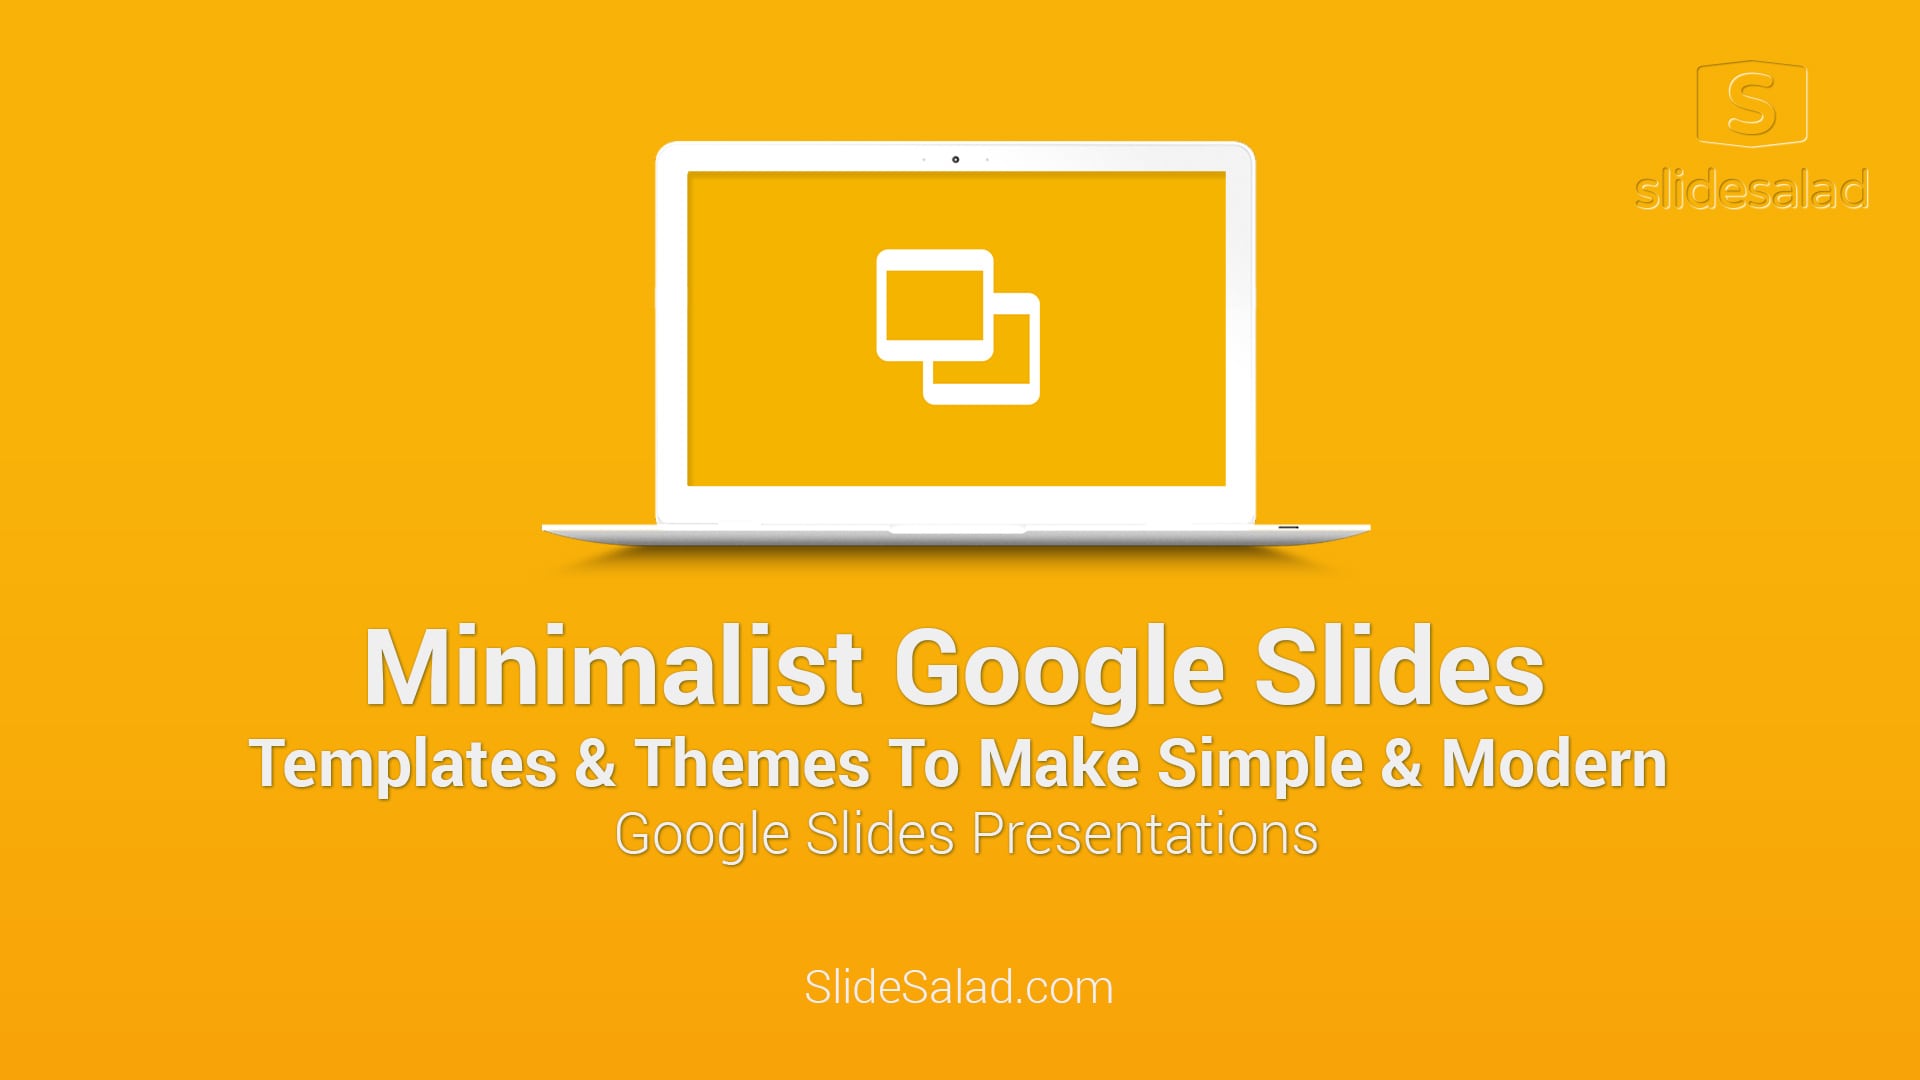 Minimalist Google Slides Templates and Themes